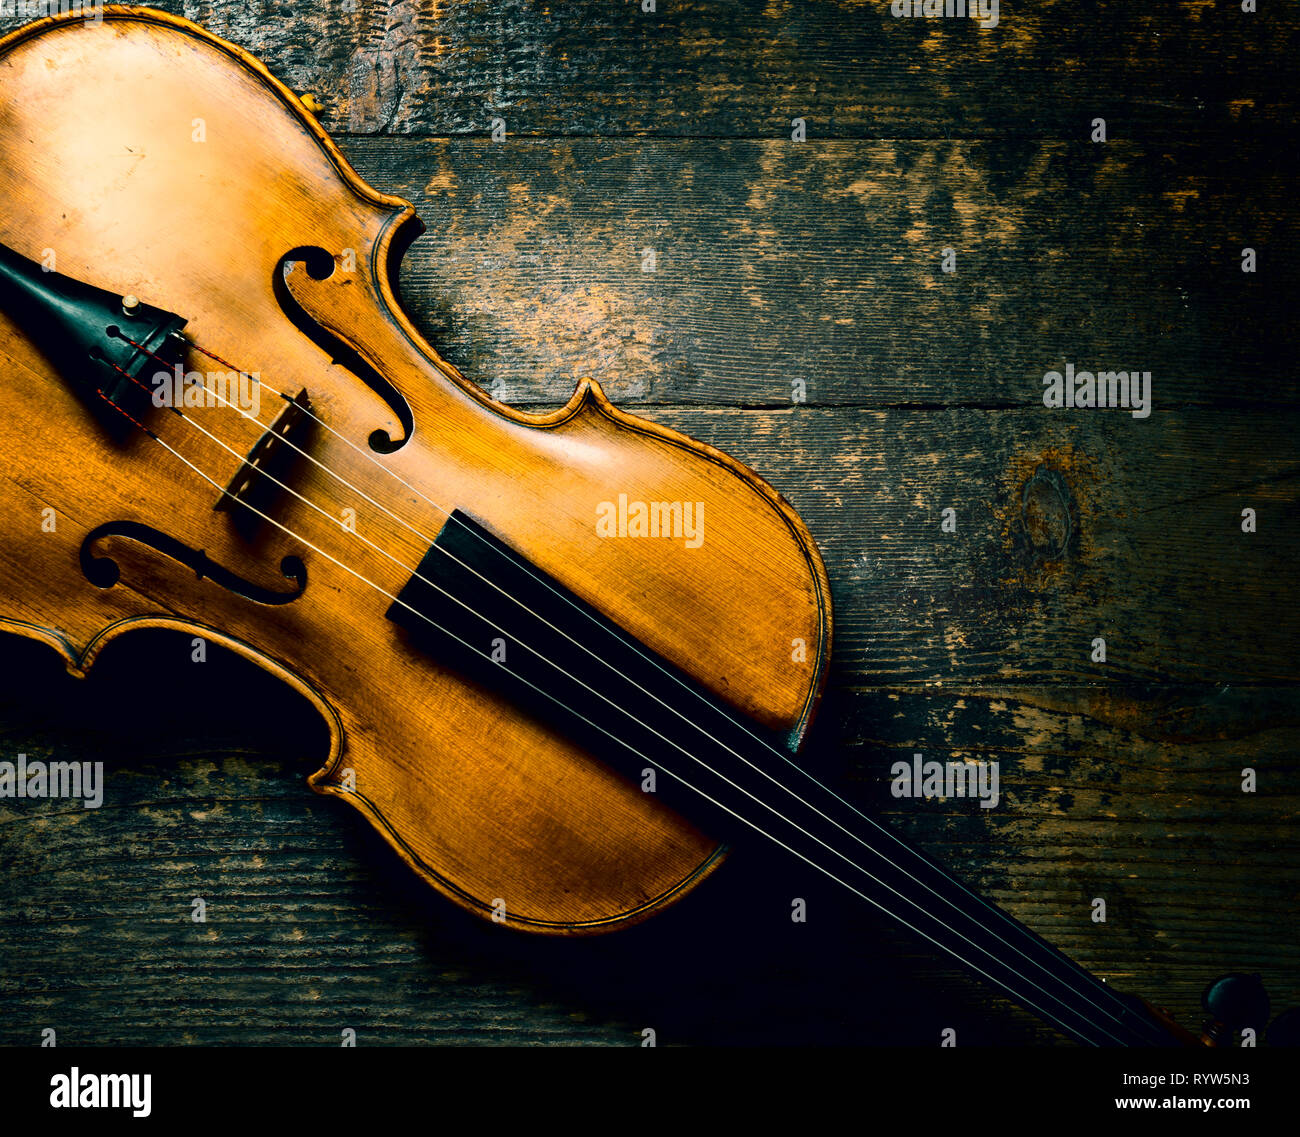 Rustic Musical Instrument Immagini e Fotos Stock - Alamy